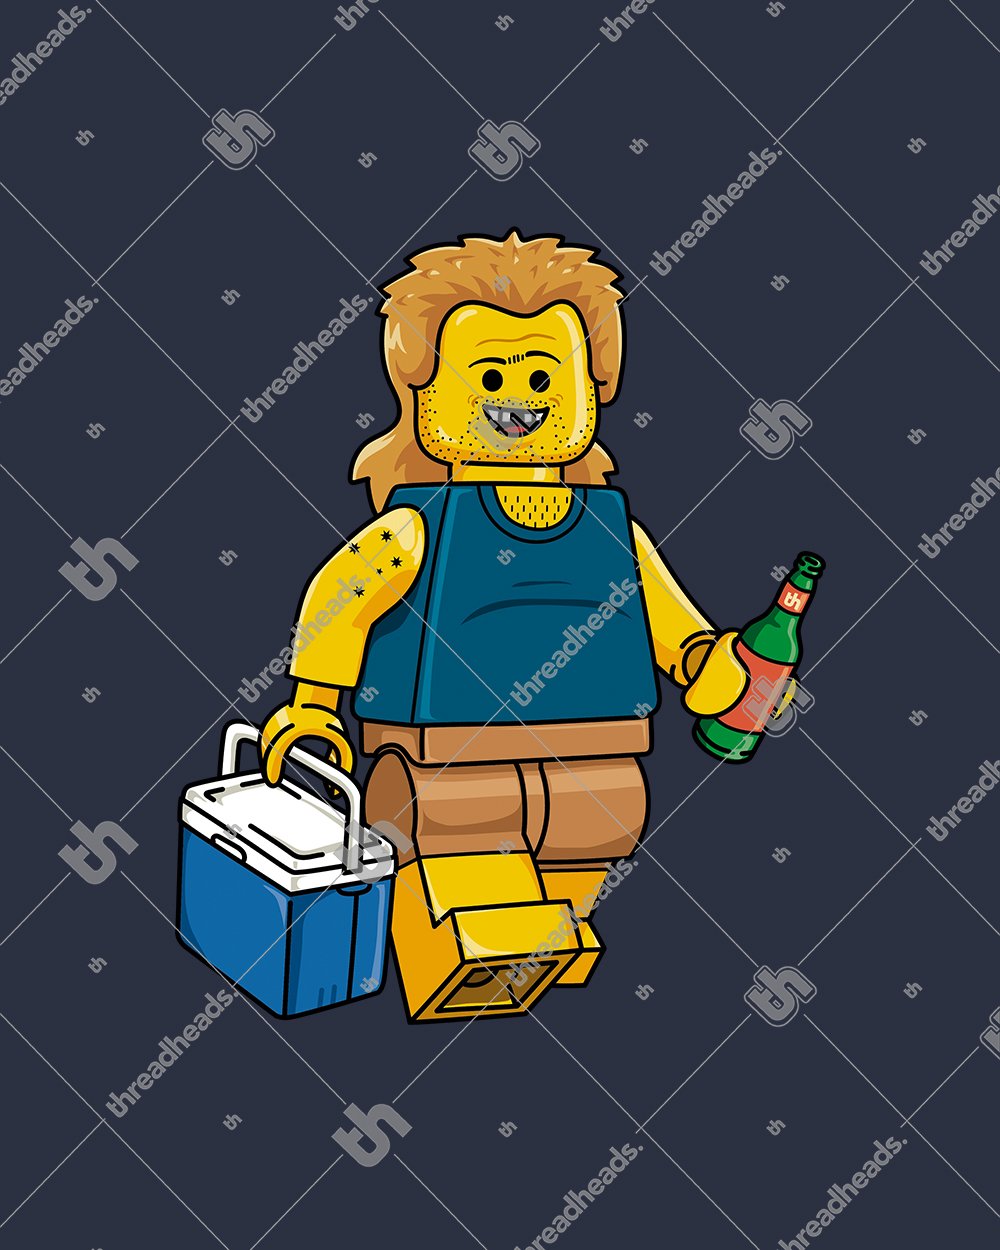 Bogan Lego Long Sleeve Australia Online #colour_navy